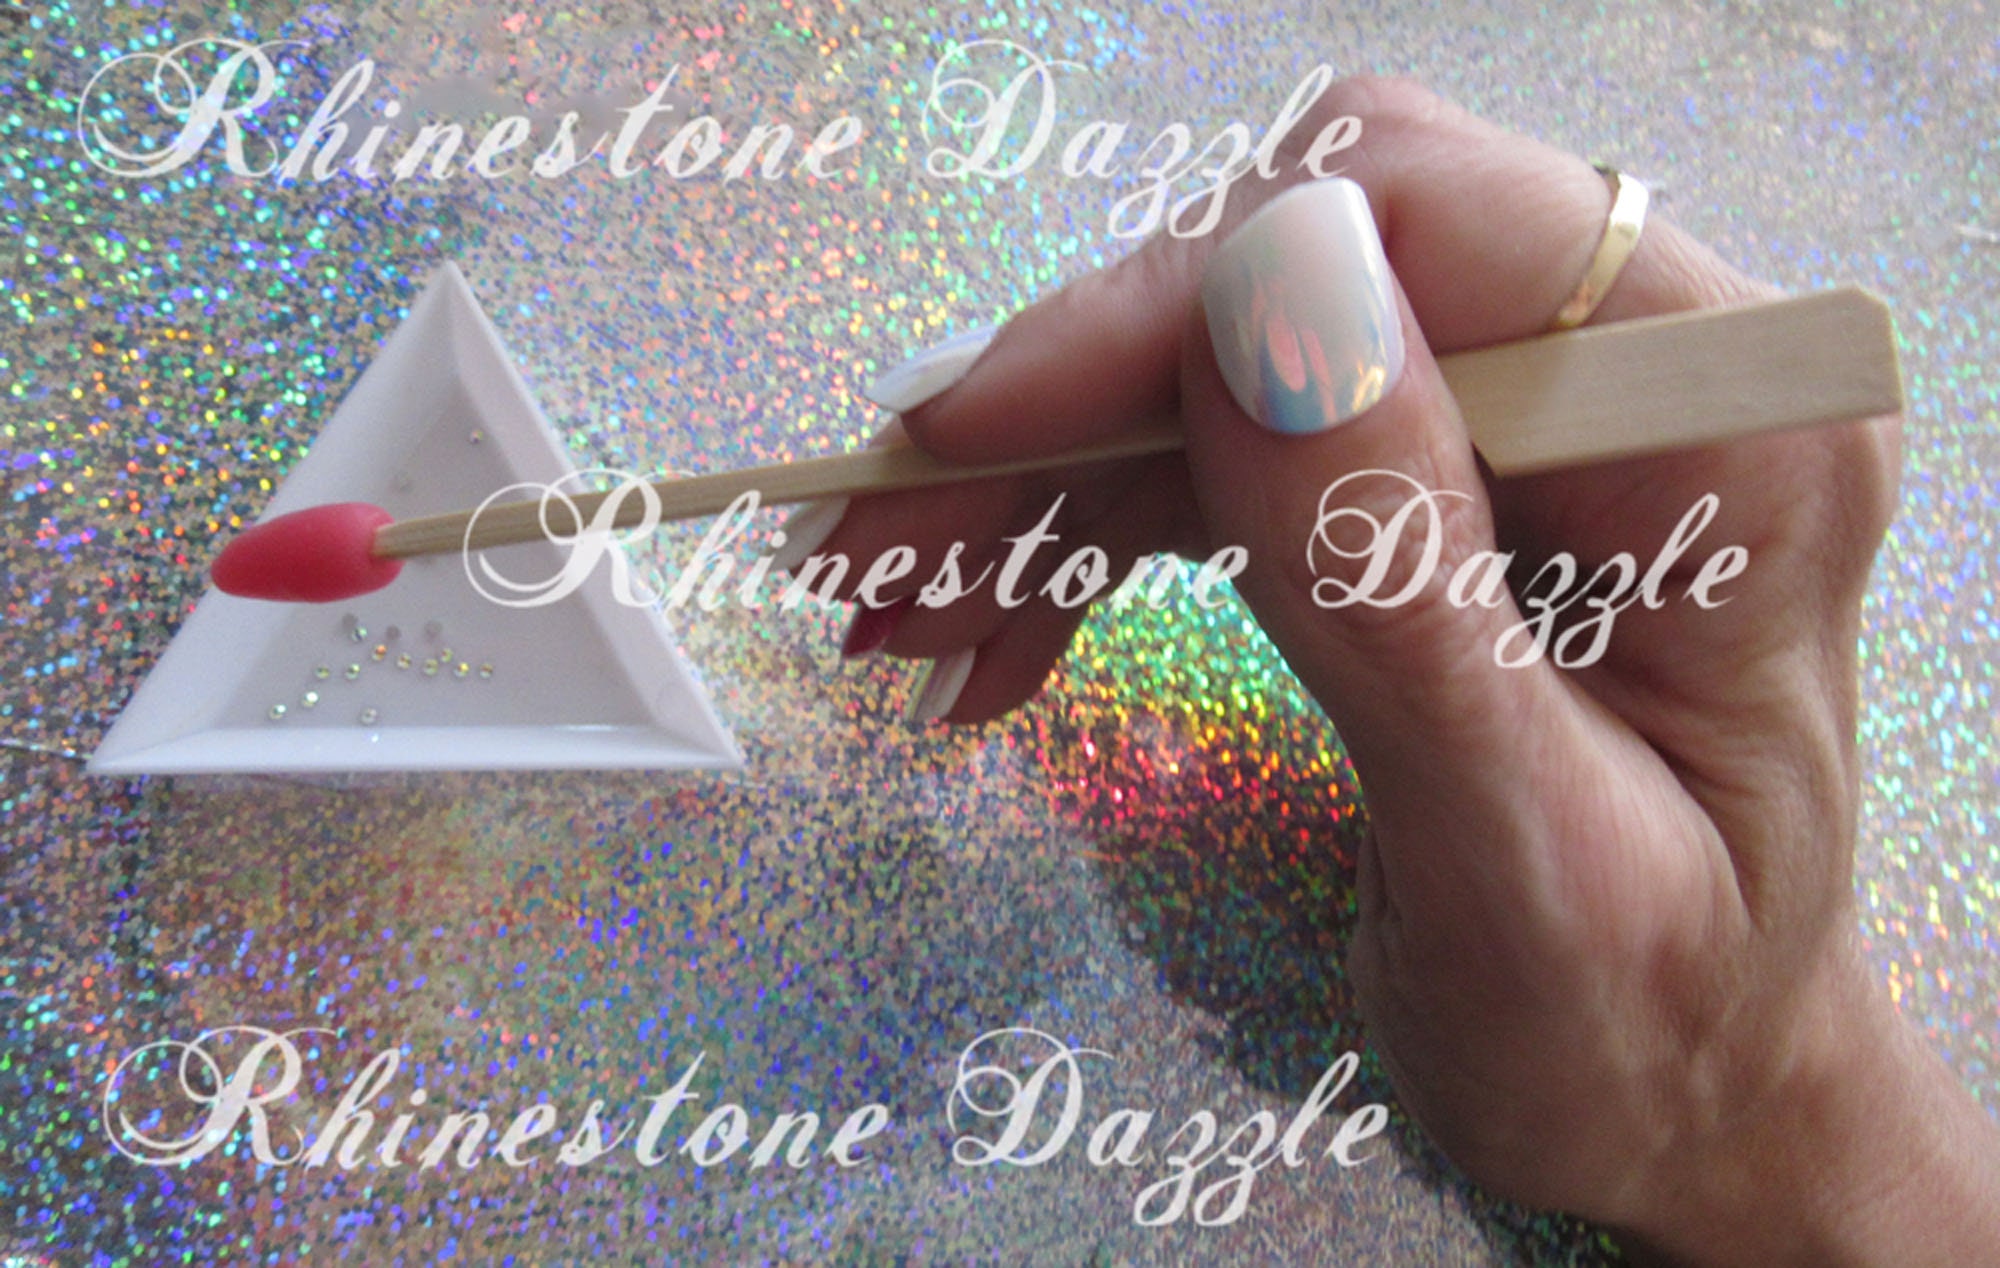 𝟐𝐏cs Rhinestone Picker Tool With 2 Wax Tip, Nail Art Rhinestones Gems  Tool,Nail Art Accessories 𝐃𝐢𝐚𝐦𝐨𝐧𝐝 𝐏𝐚𝐢𝐧𝐭𝐢𝐧𝐠 𝐃𝐨𝐭𝐭𝐢𝐧𝐠  𝐏𝐞𝐧 For Nail Art